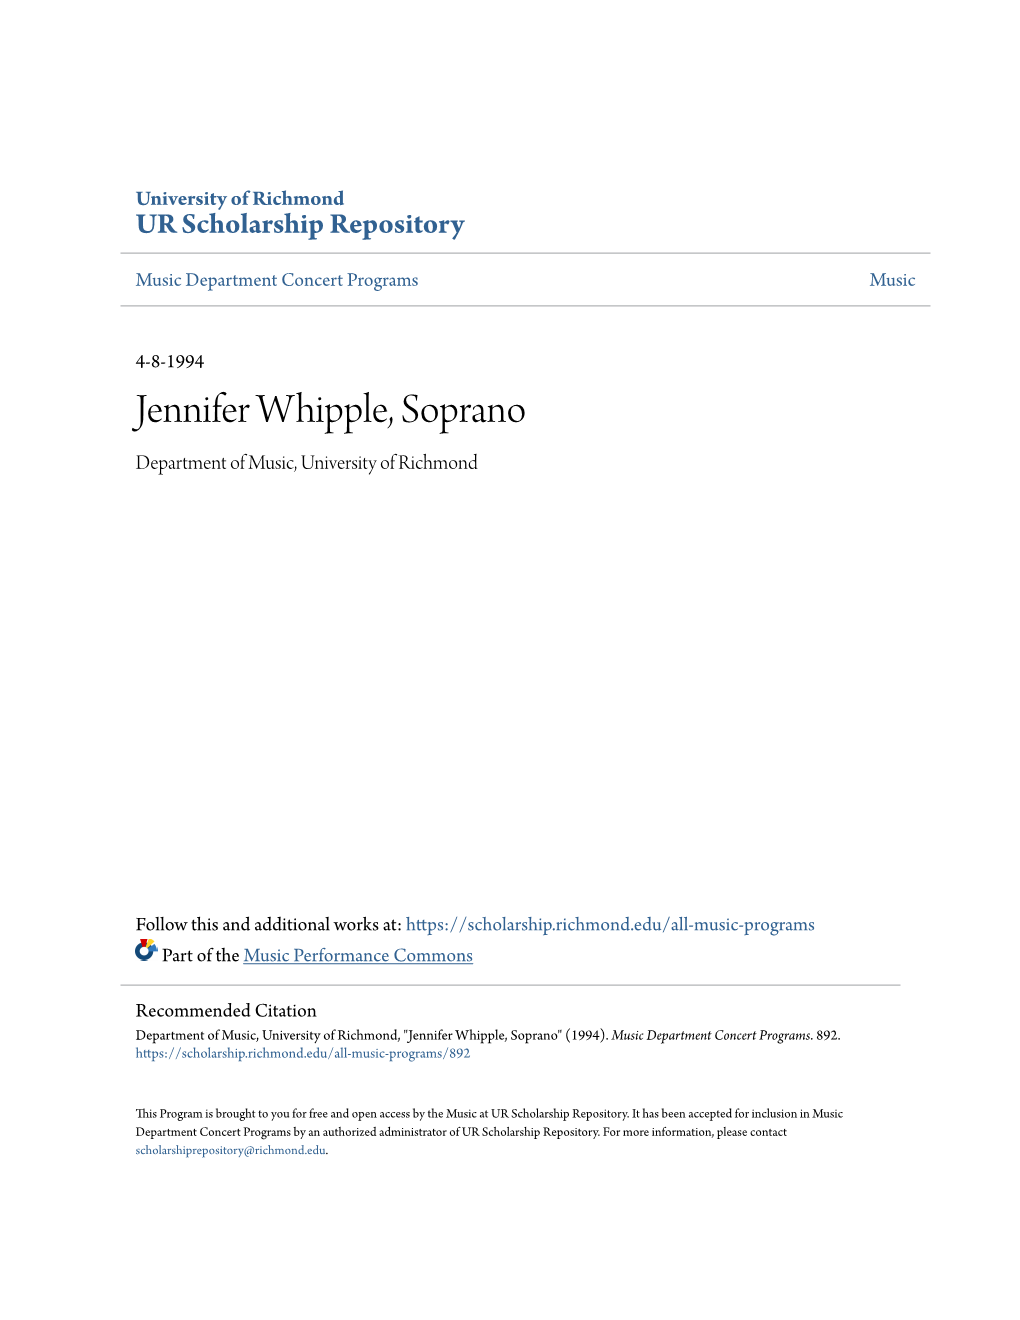 Jennifer Whipple, Soprano Department of Music, University of Richmond